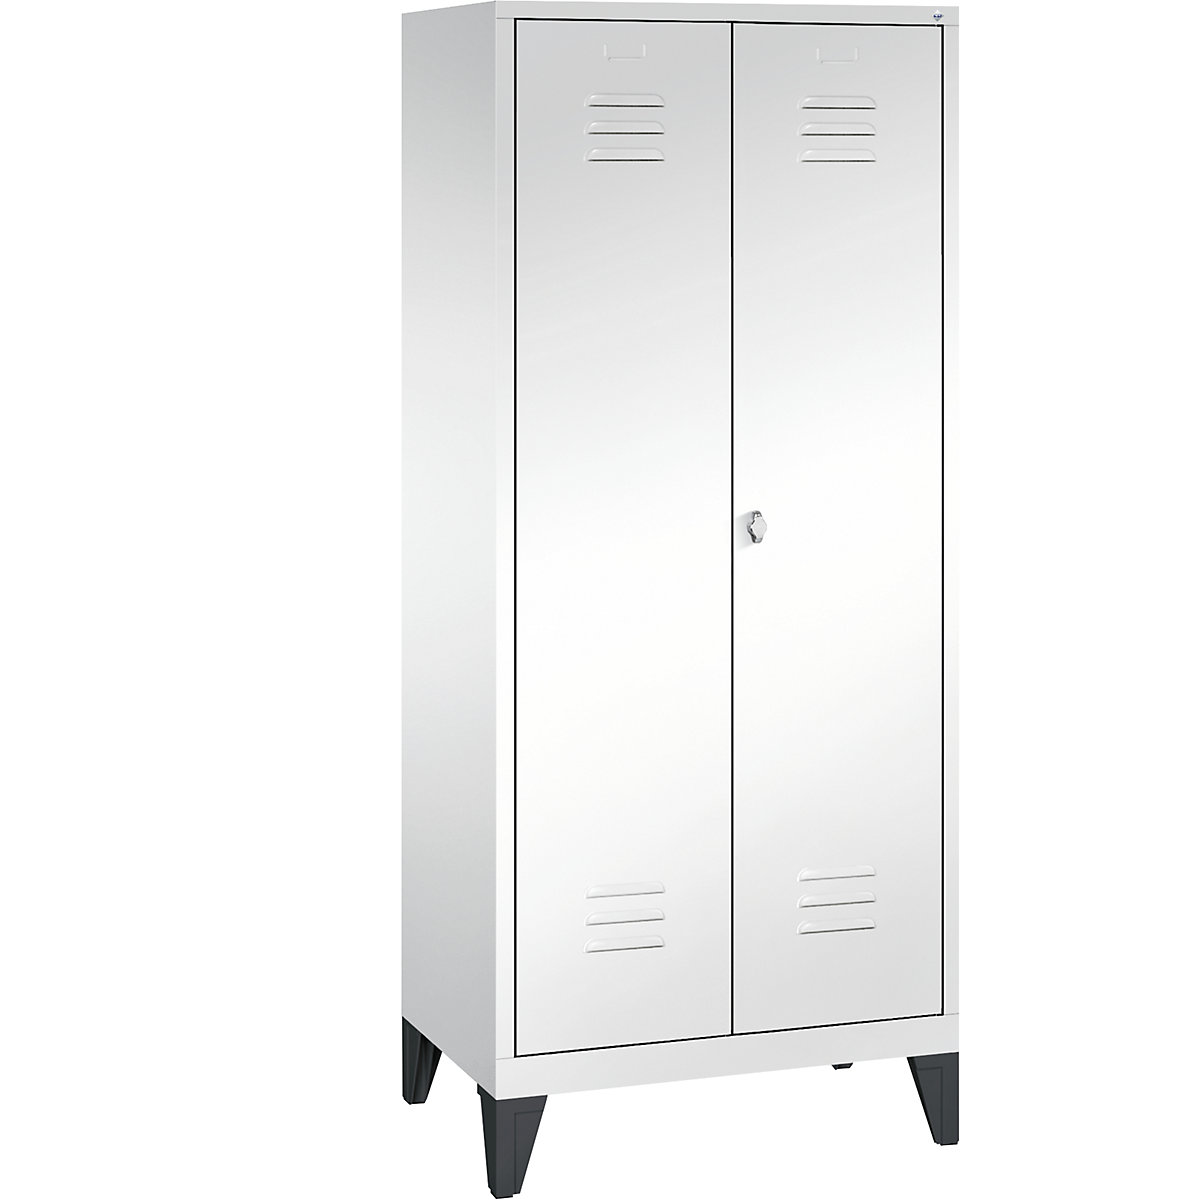 CLASSIC cloakroom locker with feet - C+P